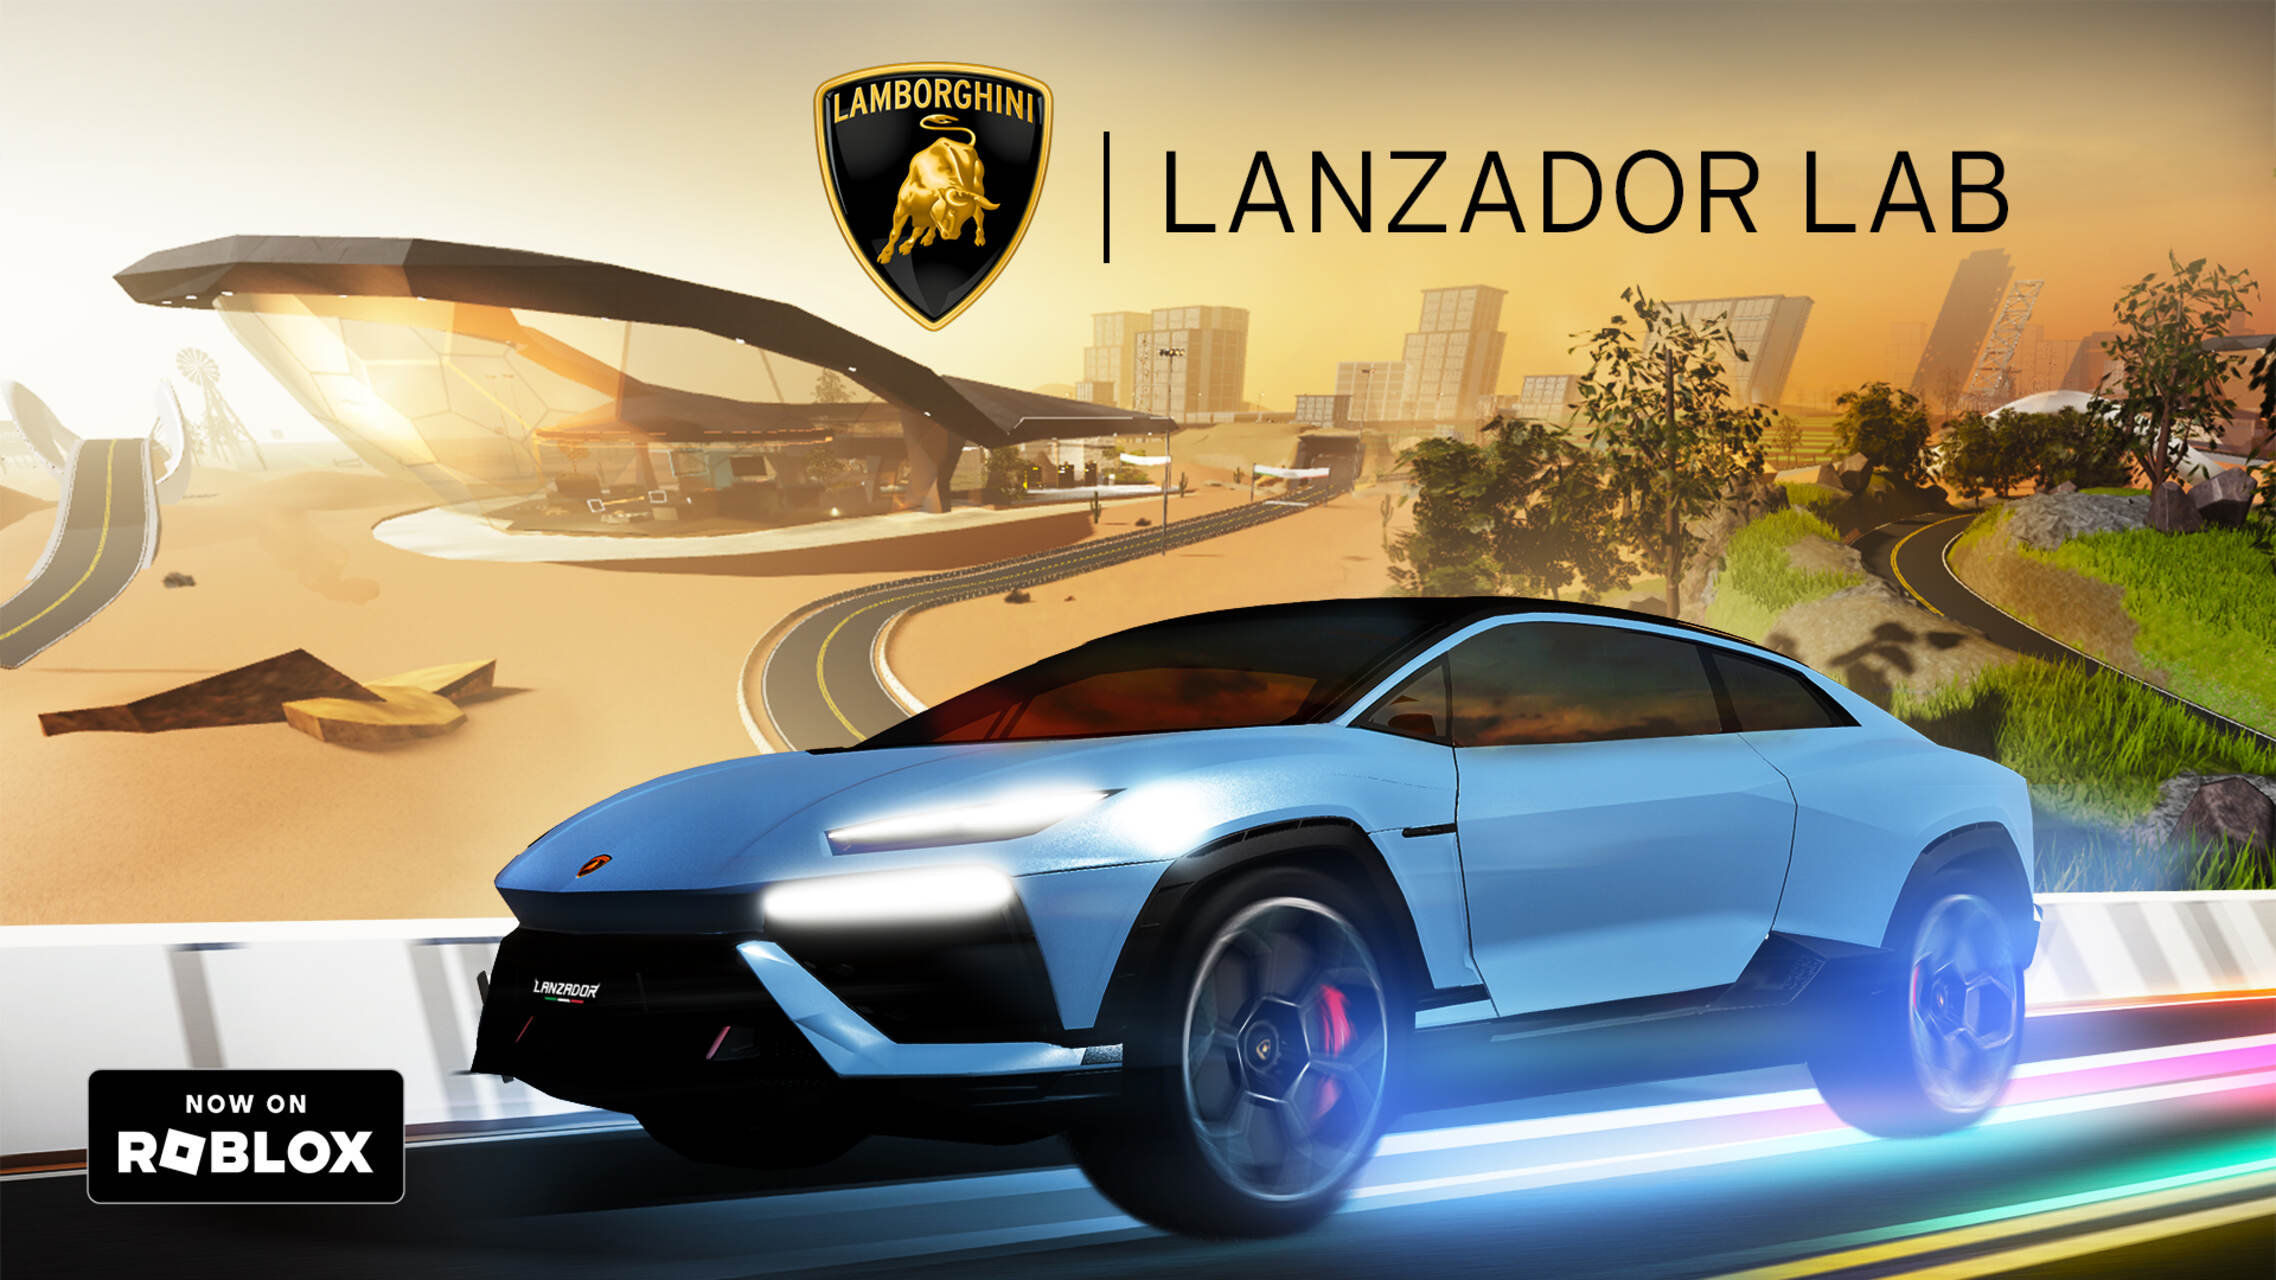 Lanzador: Το ηλεκτρικό υπεραυτοκίνητο της Automobili Lamborghini βρίσκεται στο Roblox, μια 3D καθηλωτική πλατφόρμα